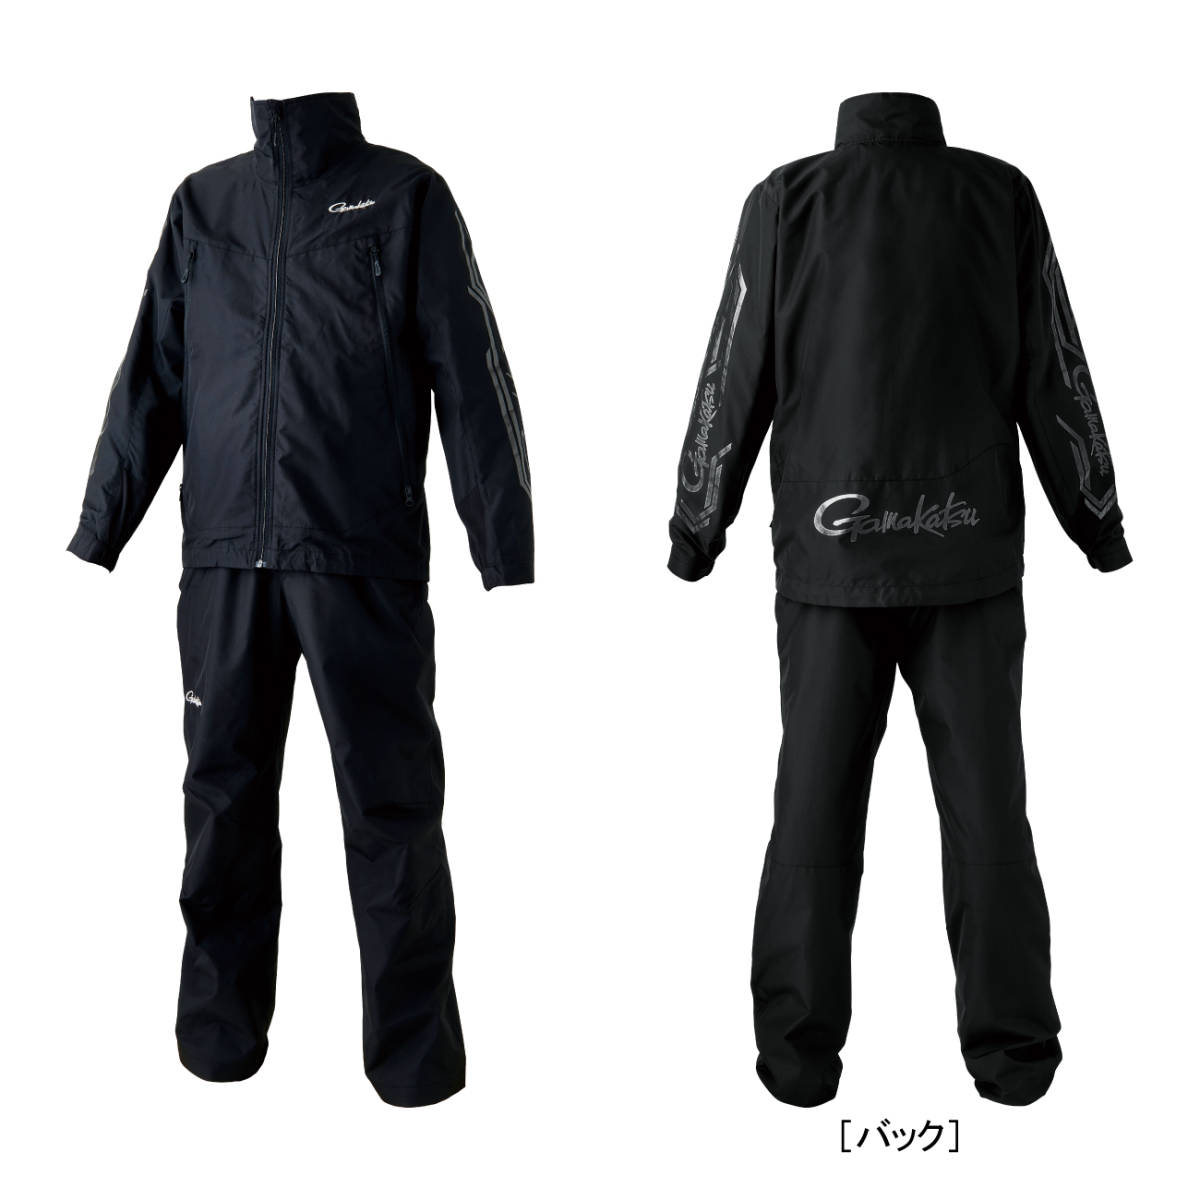  Gamakatsu Wind брейкер костюм GM3722* чёрный чёрный *L размер 